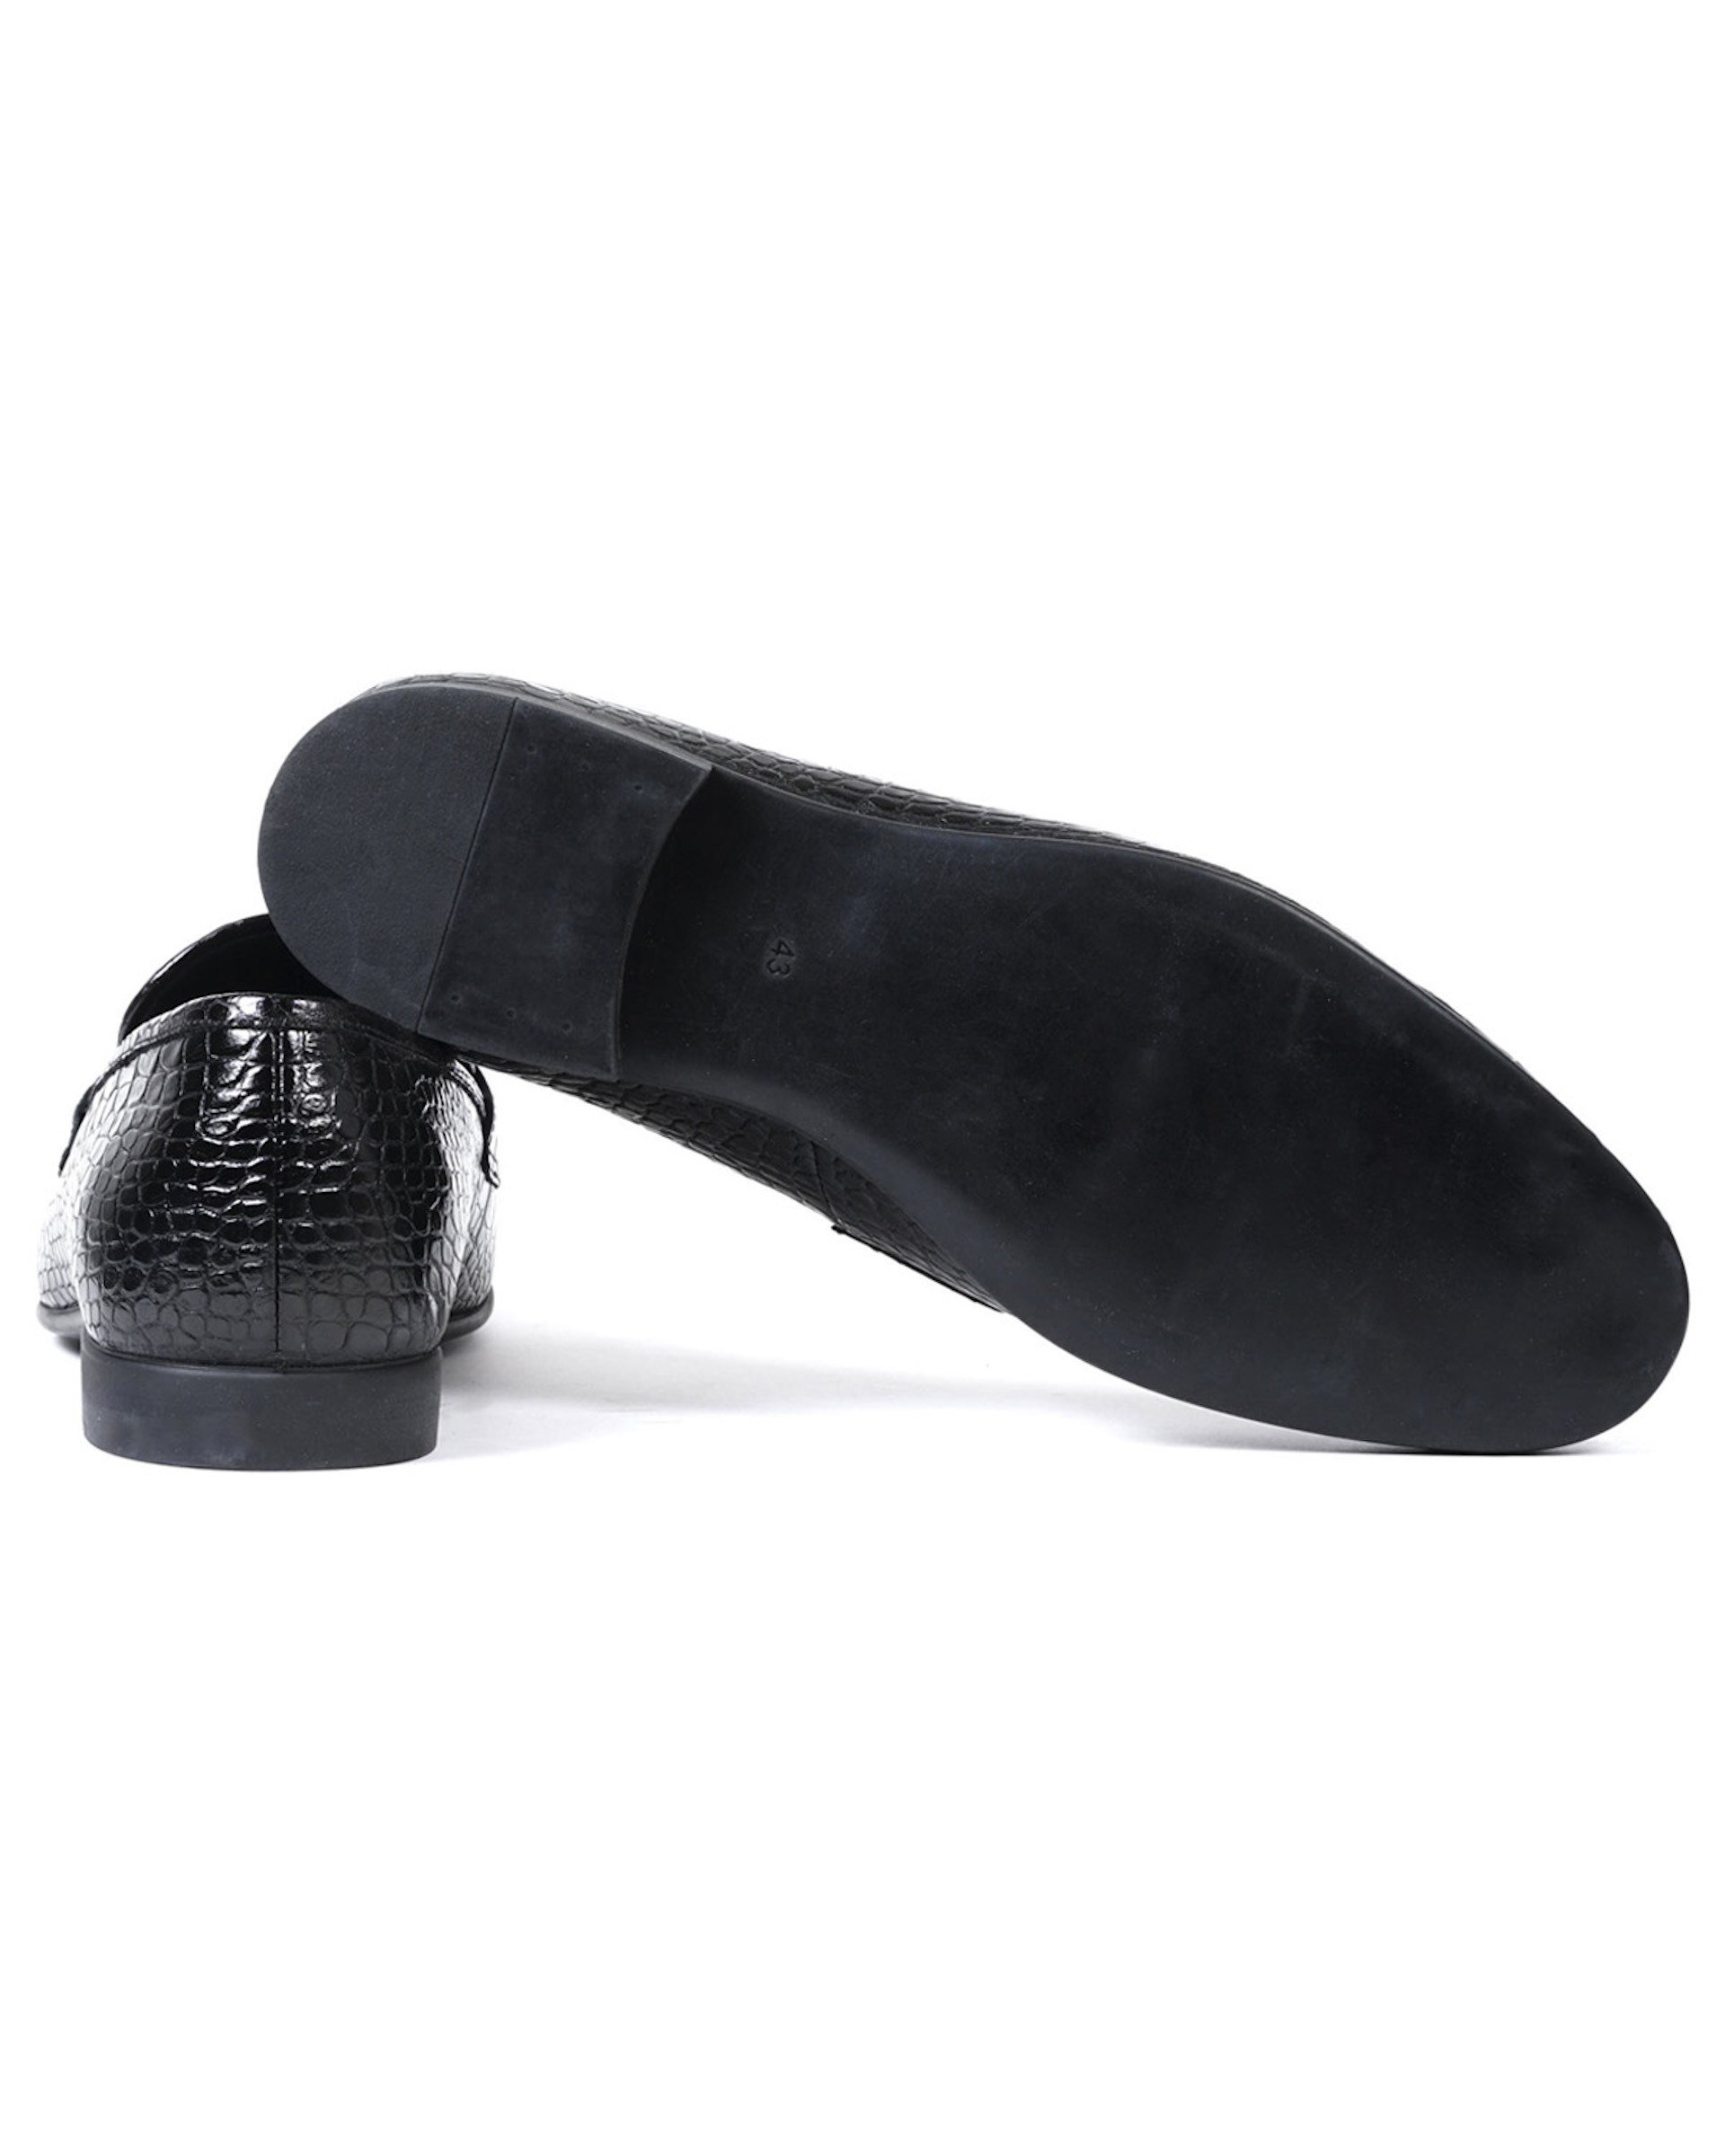 Fantasie Black Crocodile Pattern Genuine Leather Classic Men Shoe